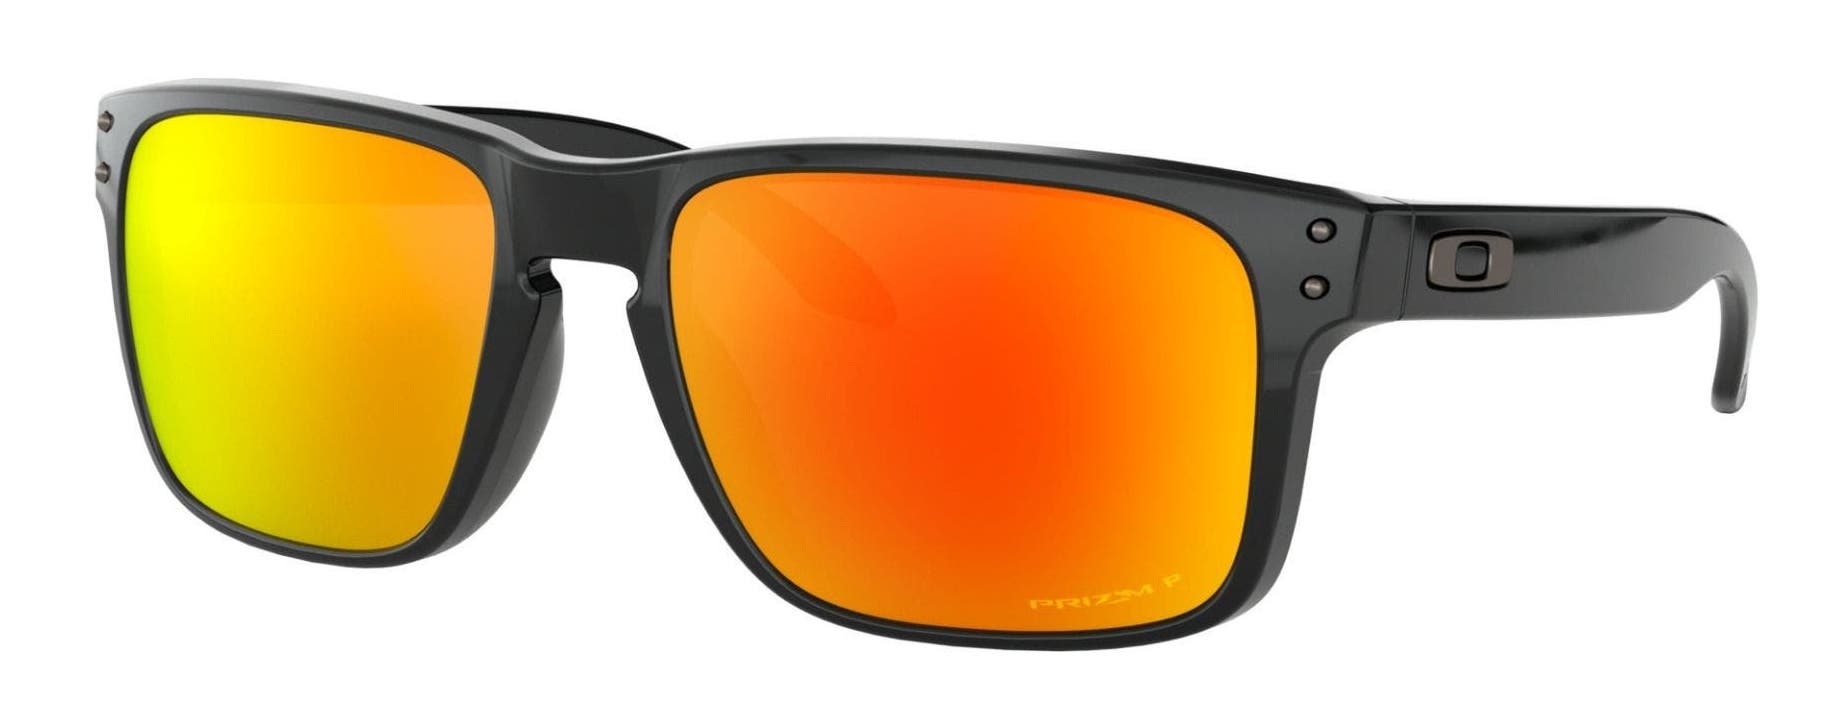 Oakley Holbrook polarized prescription sunglasses with black frame and PRIZM ruby lenses.